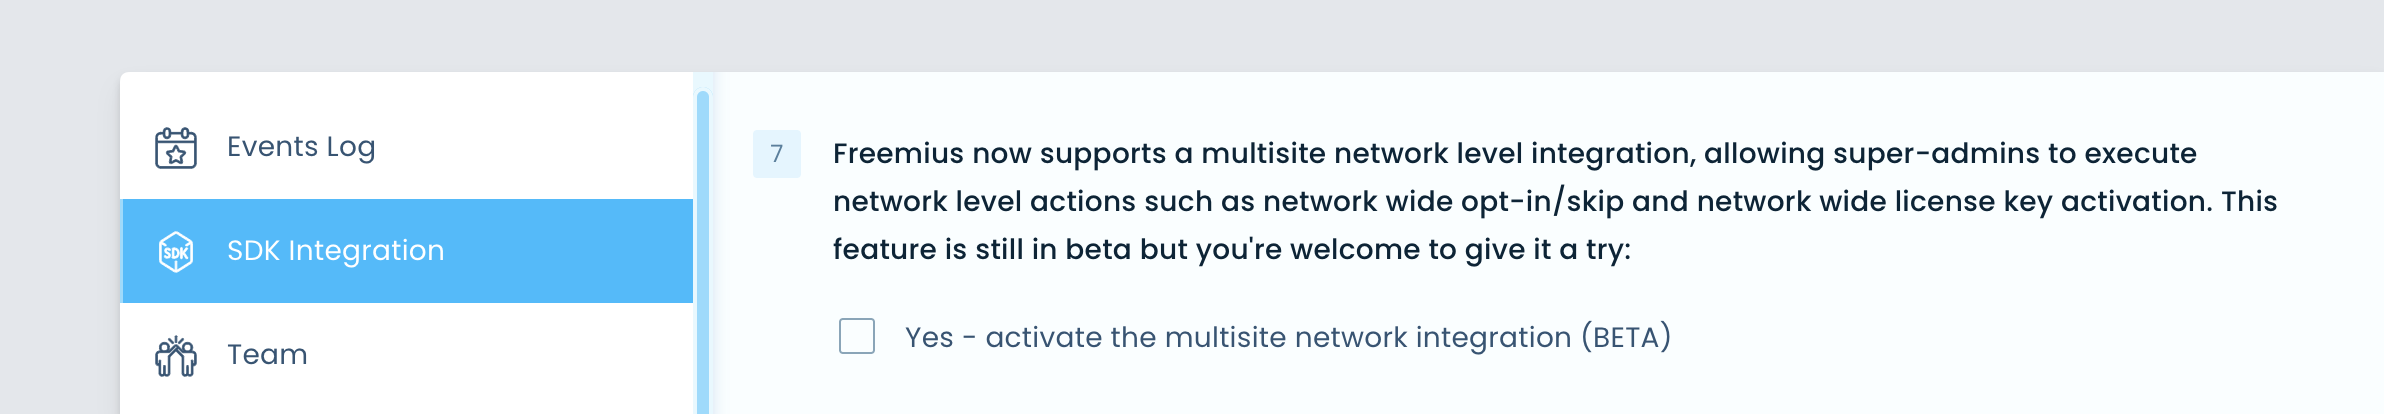 Freemius Dashboard - Multisite Network Integration Activation